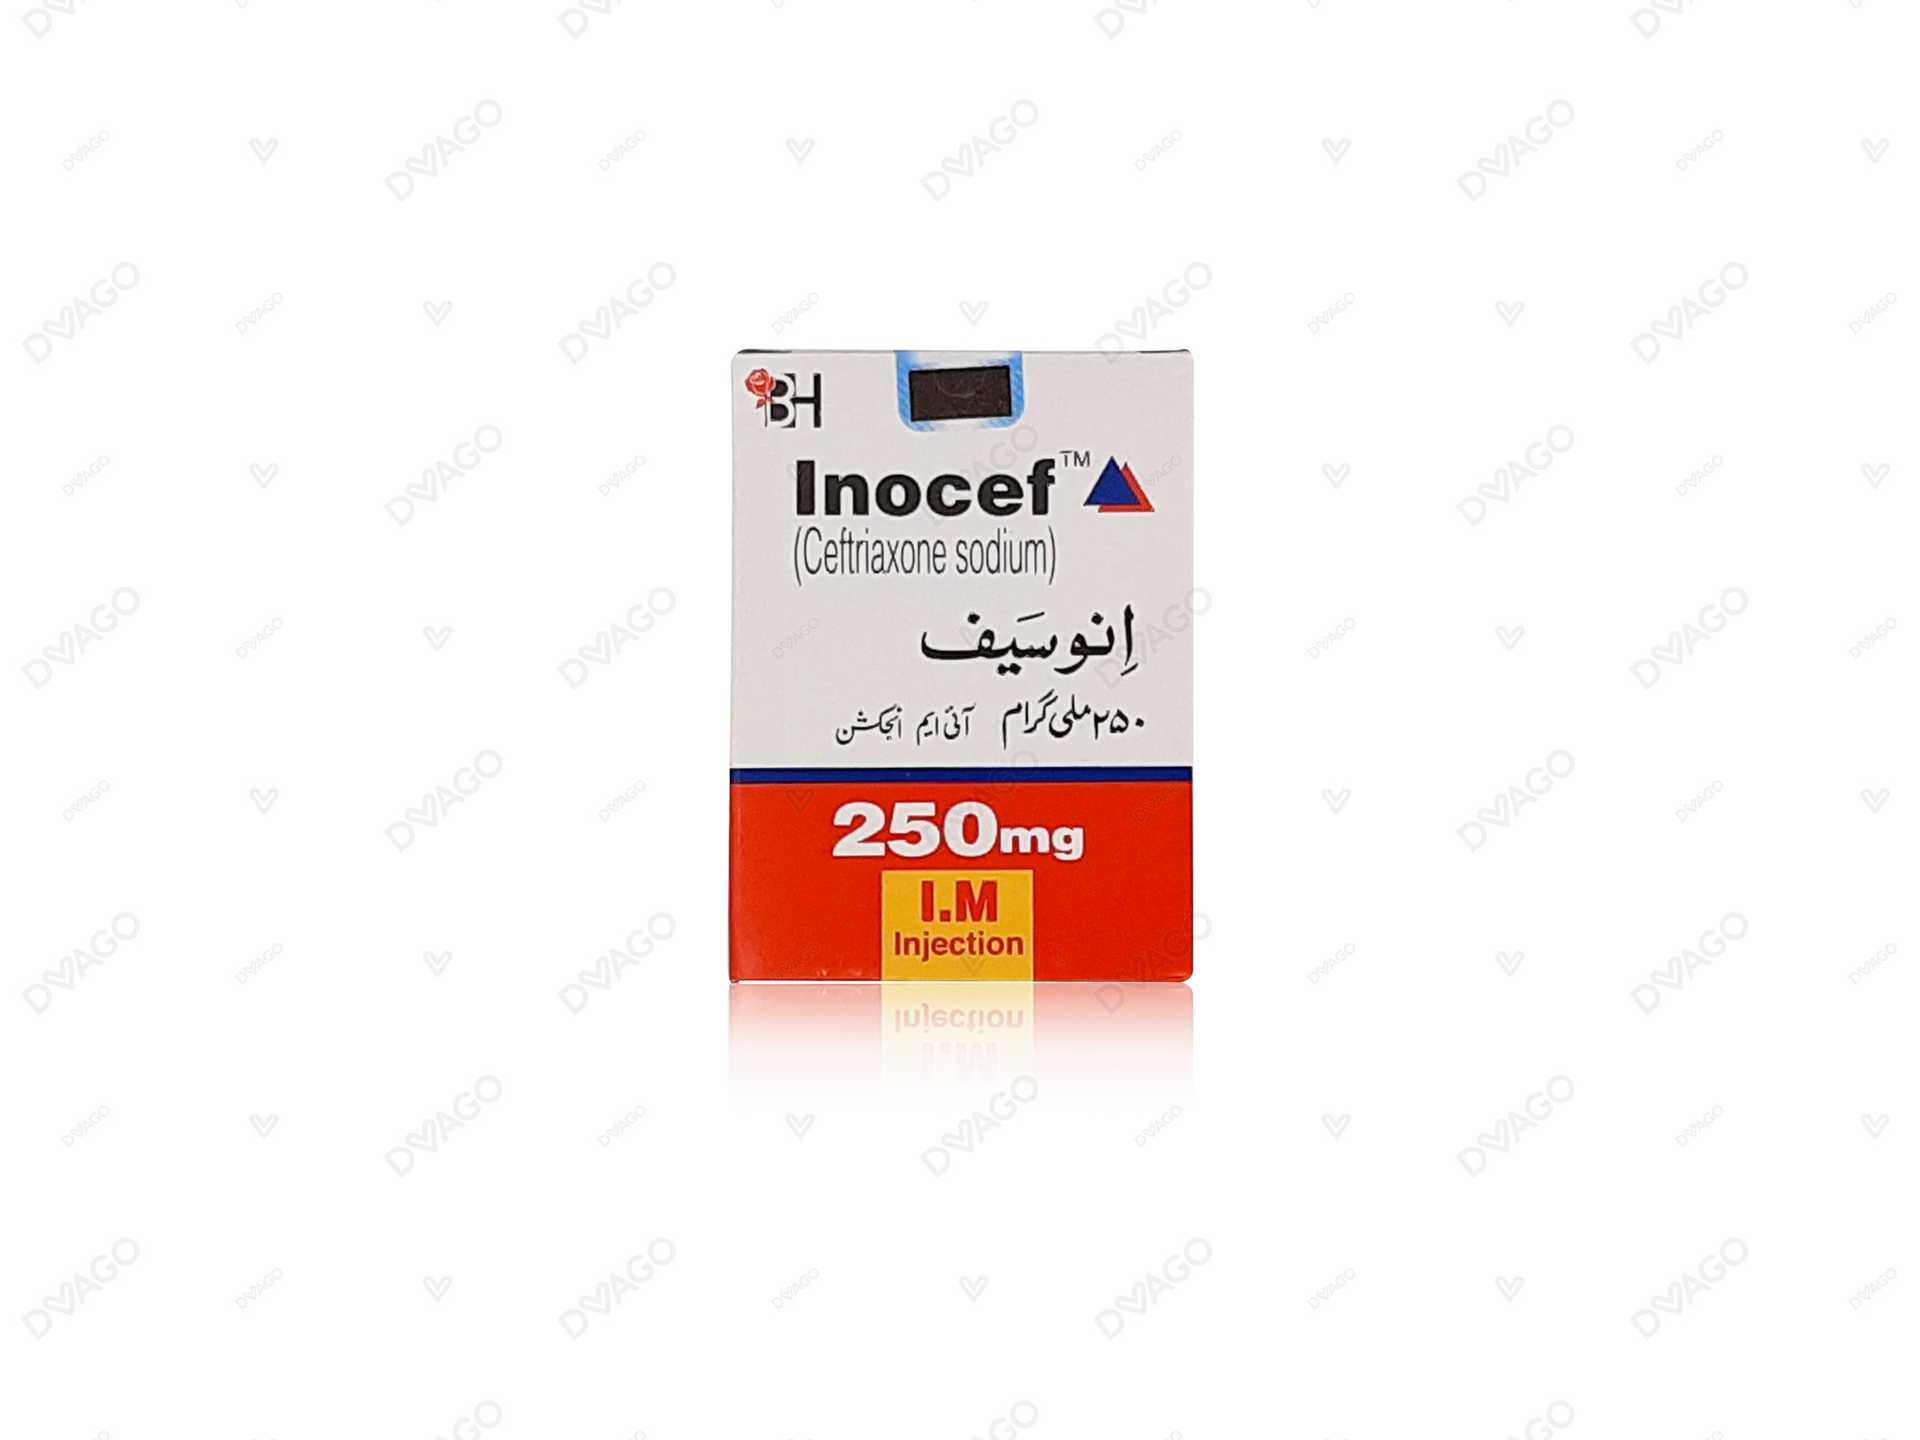 inocef injection im 250 mg 1 vial